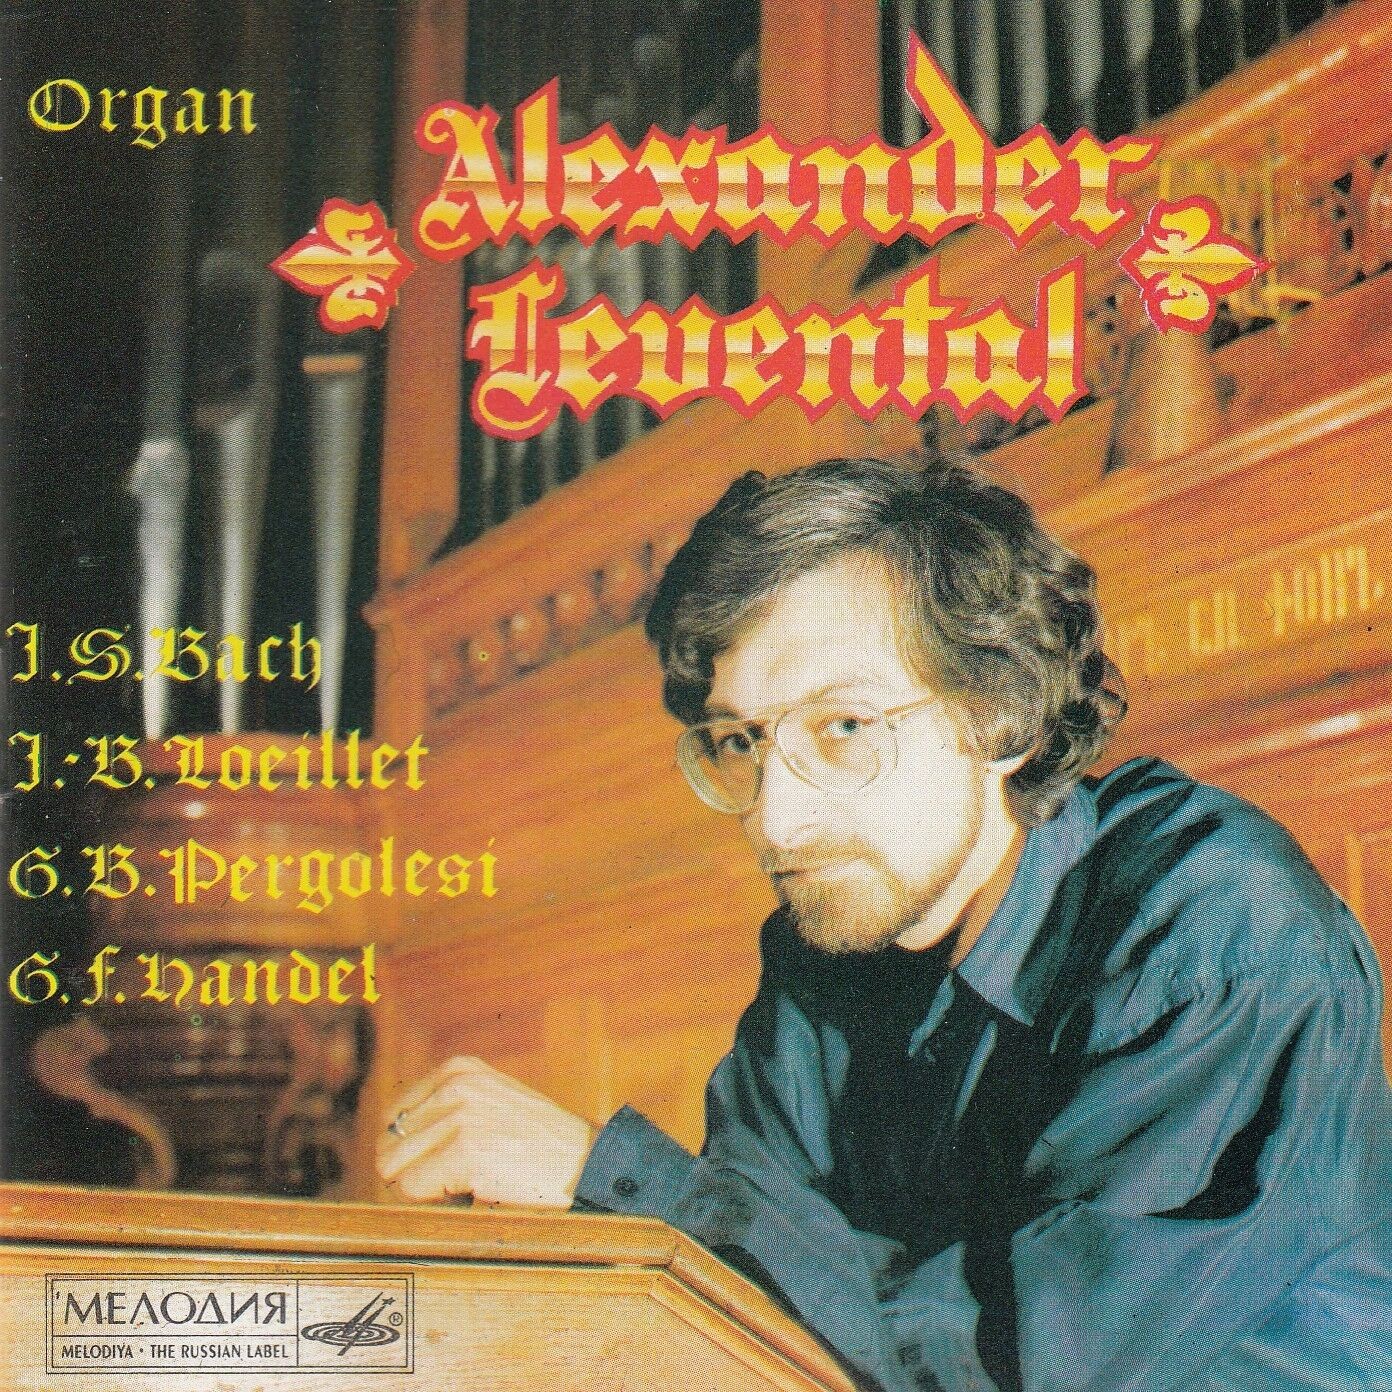 Alexander LEVENTAL, organ